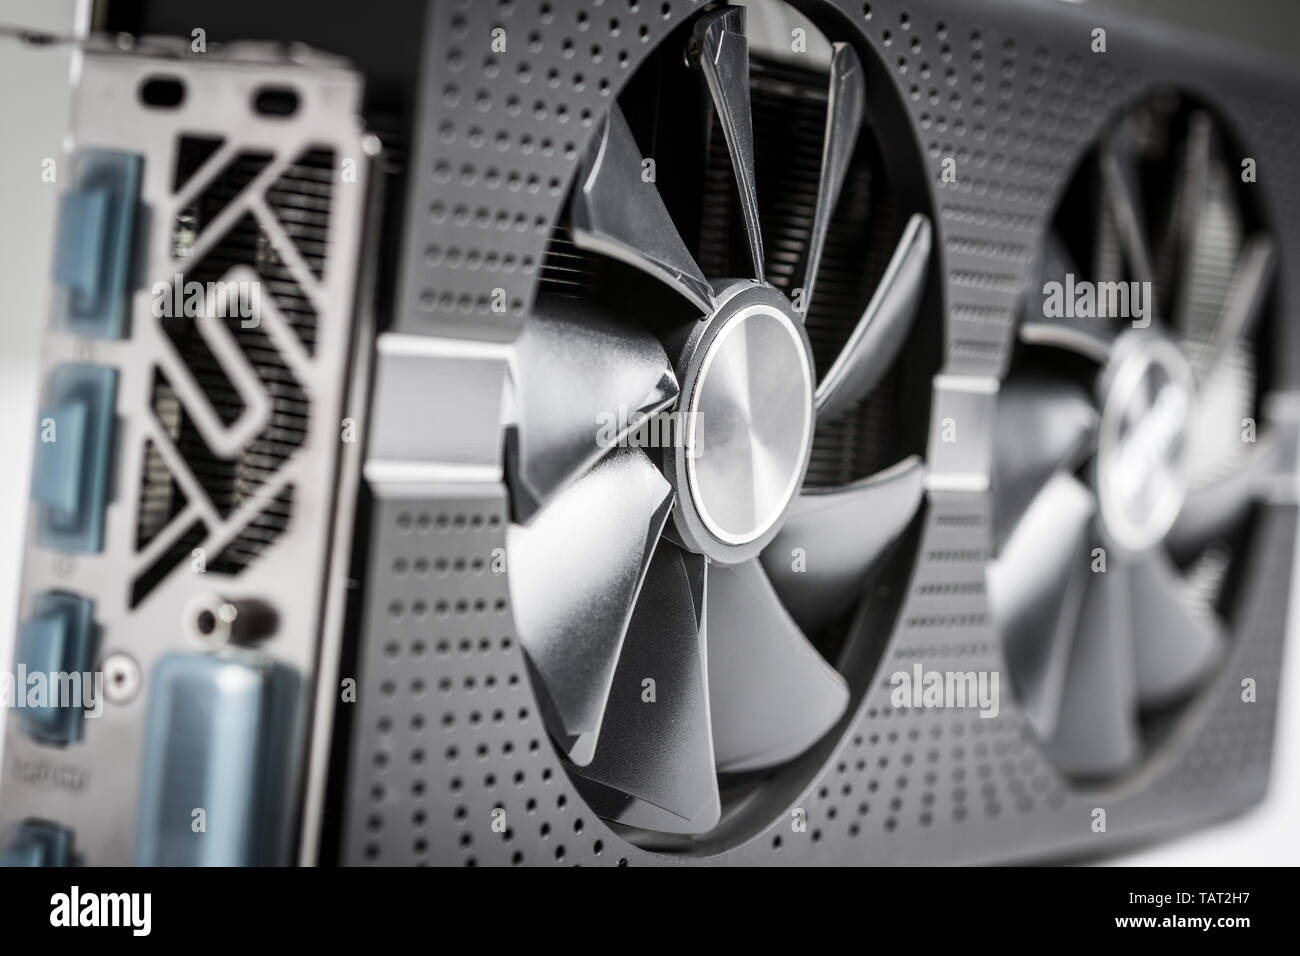 PC Gaming GPU Graphic Card Close Up Stock Photo